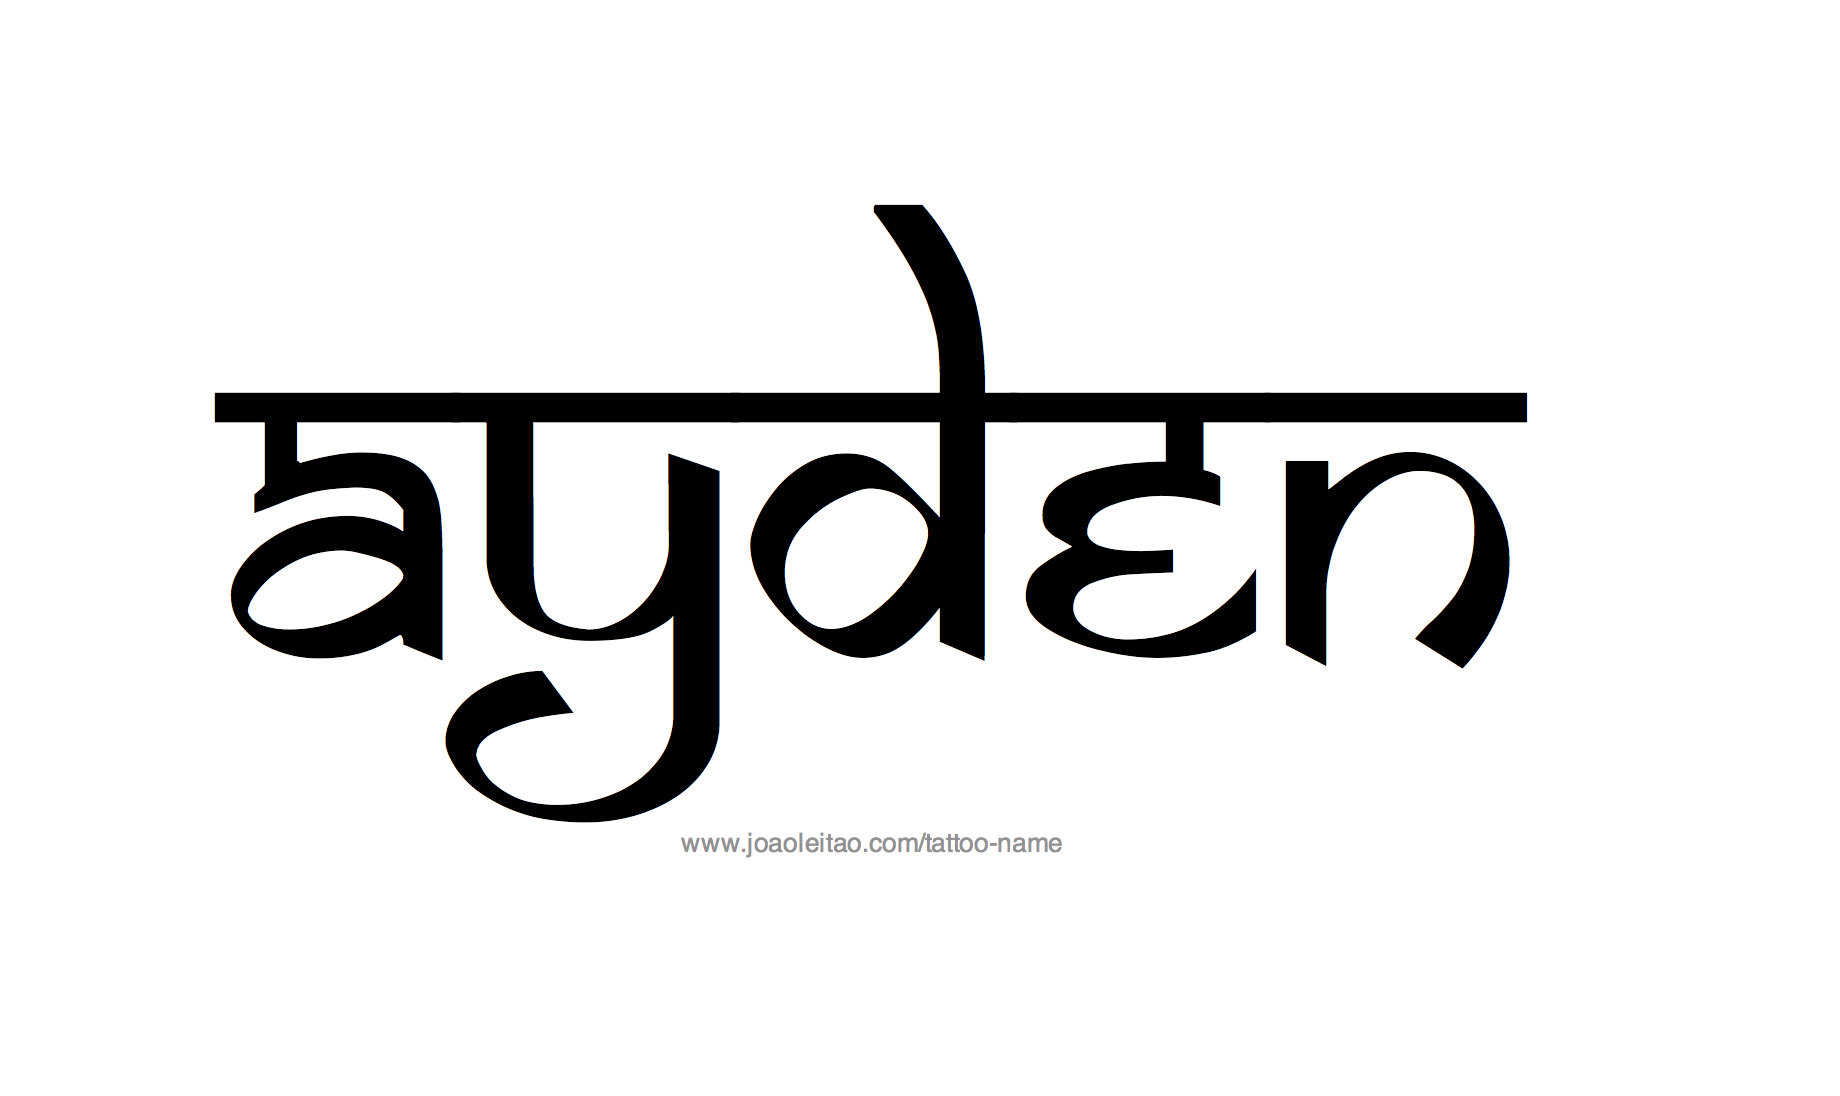 Ayden Name Tattoo Designs